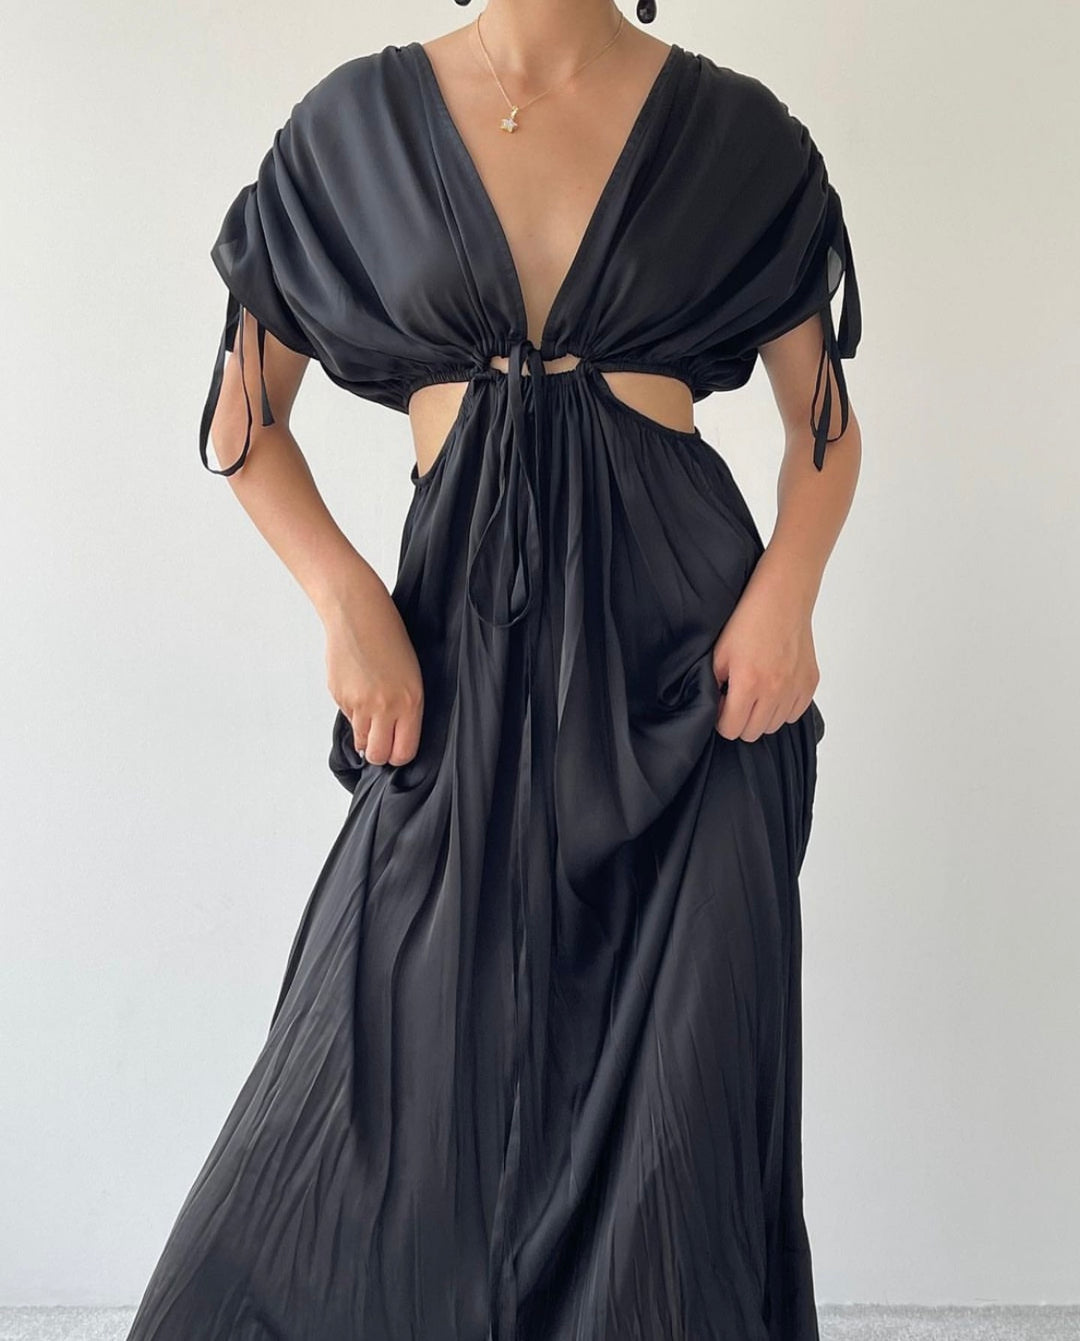 Milano black dress